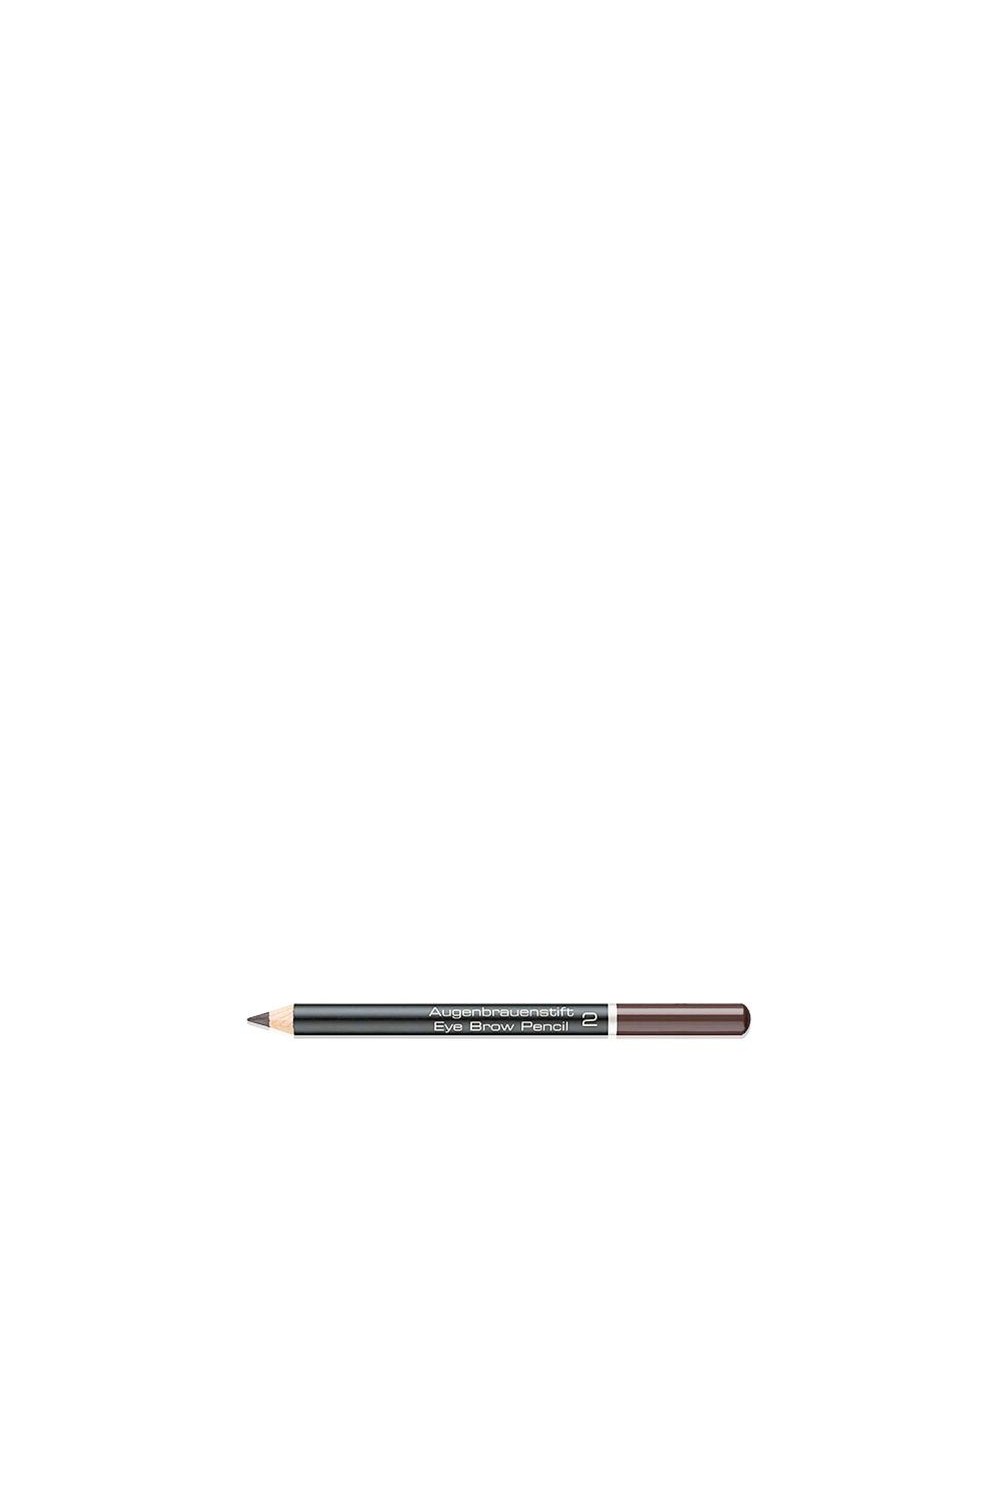 Artdeco Eye Brow Pencil 2 Intensive Brown